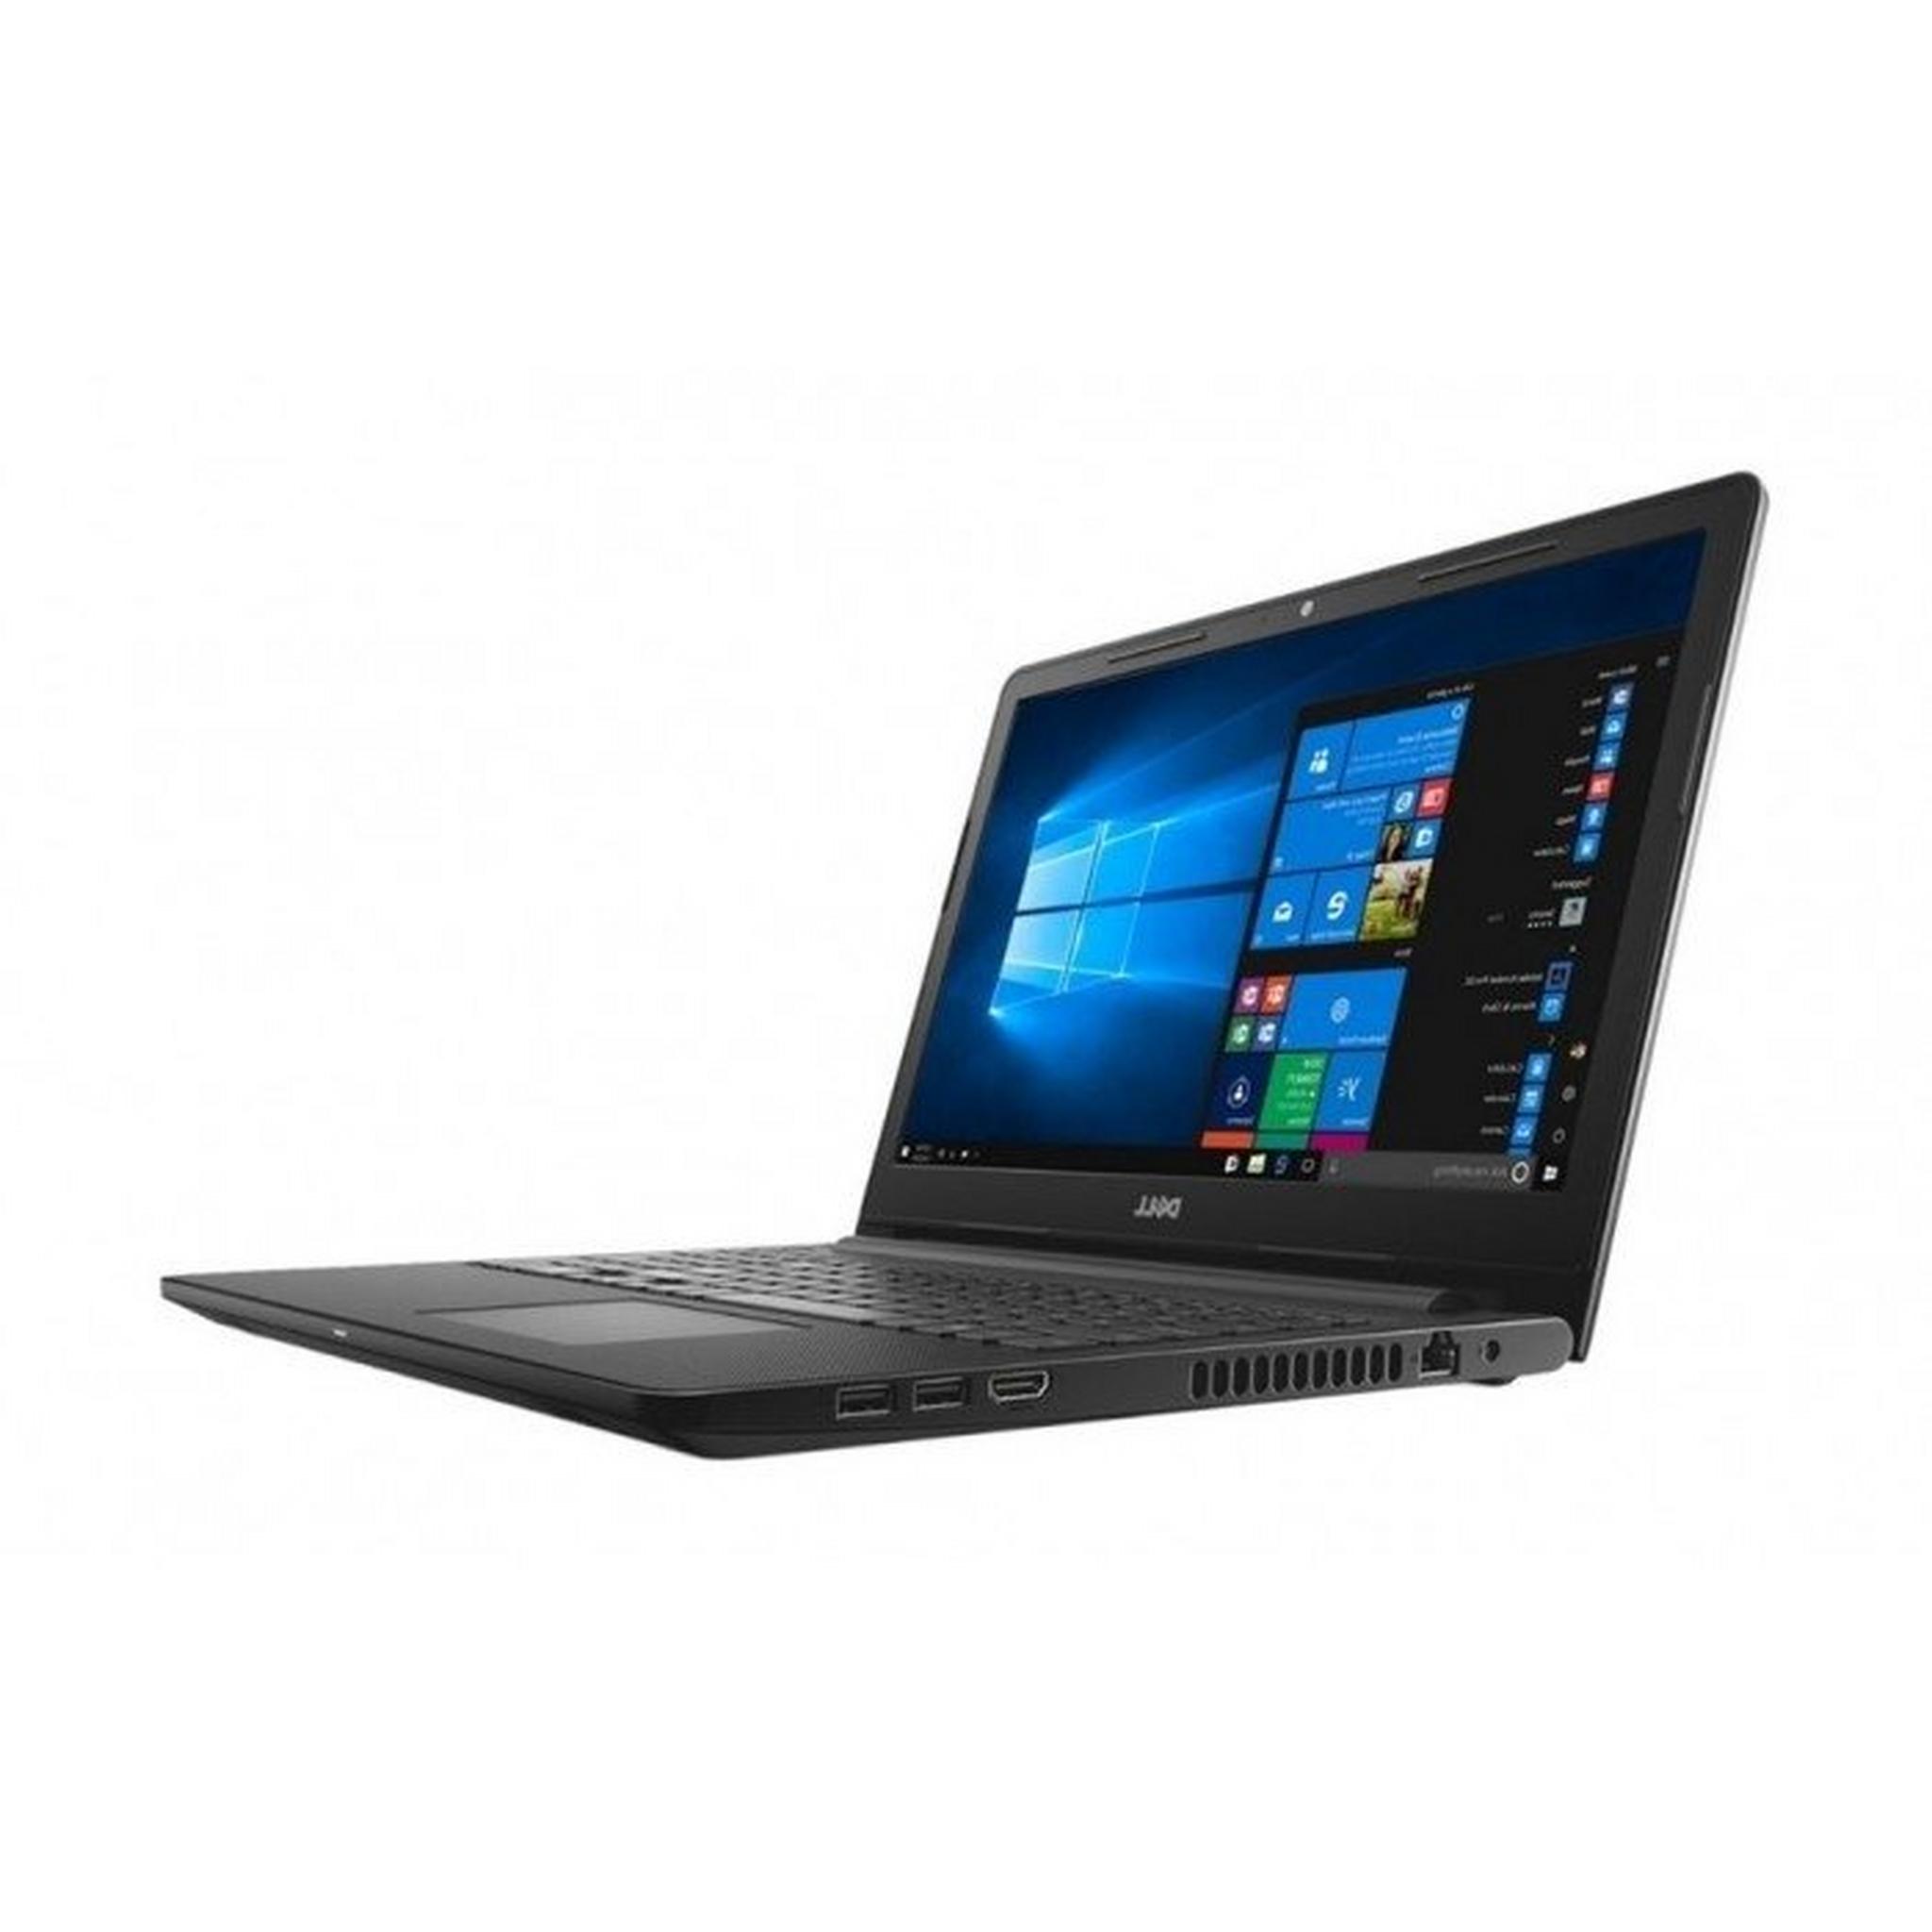 Dell Inspiron 15 Core i7 8GB RAM 1TB HDD 15.6-inch Laptop - Black